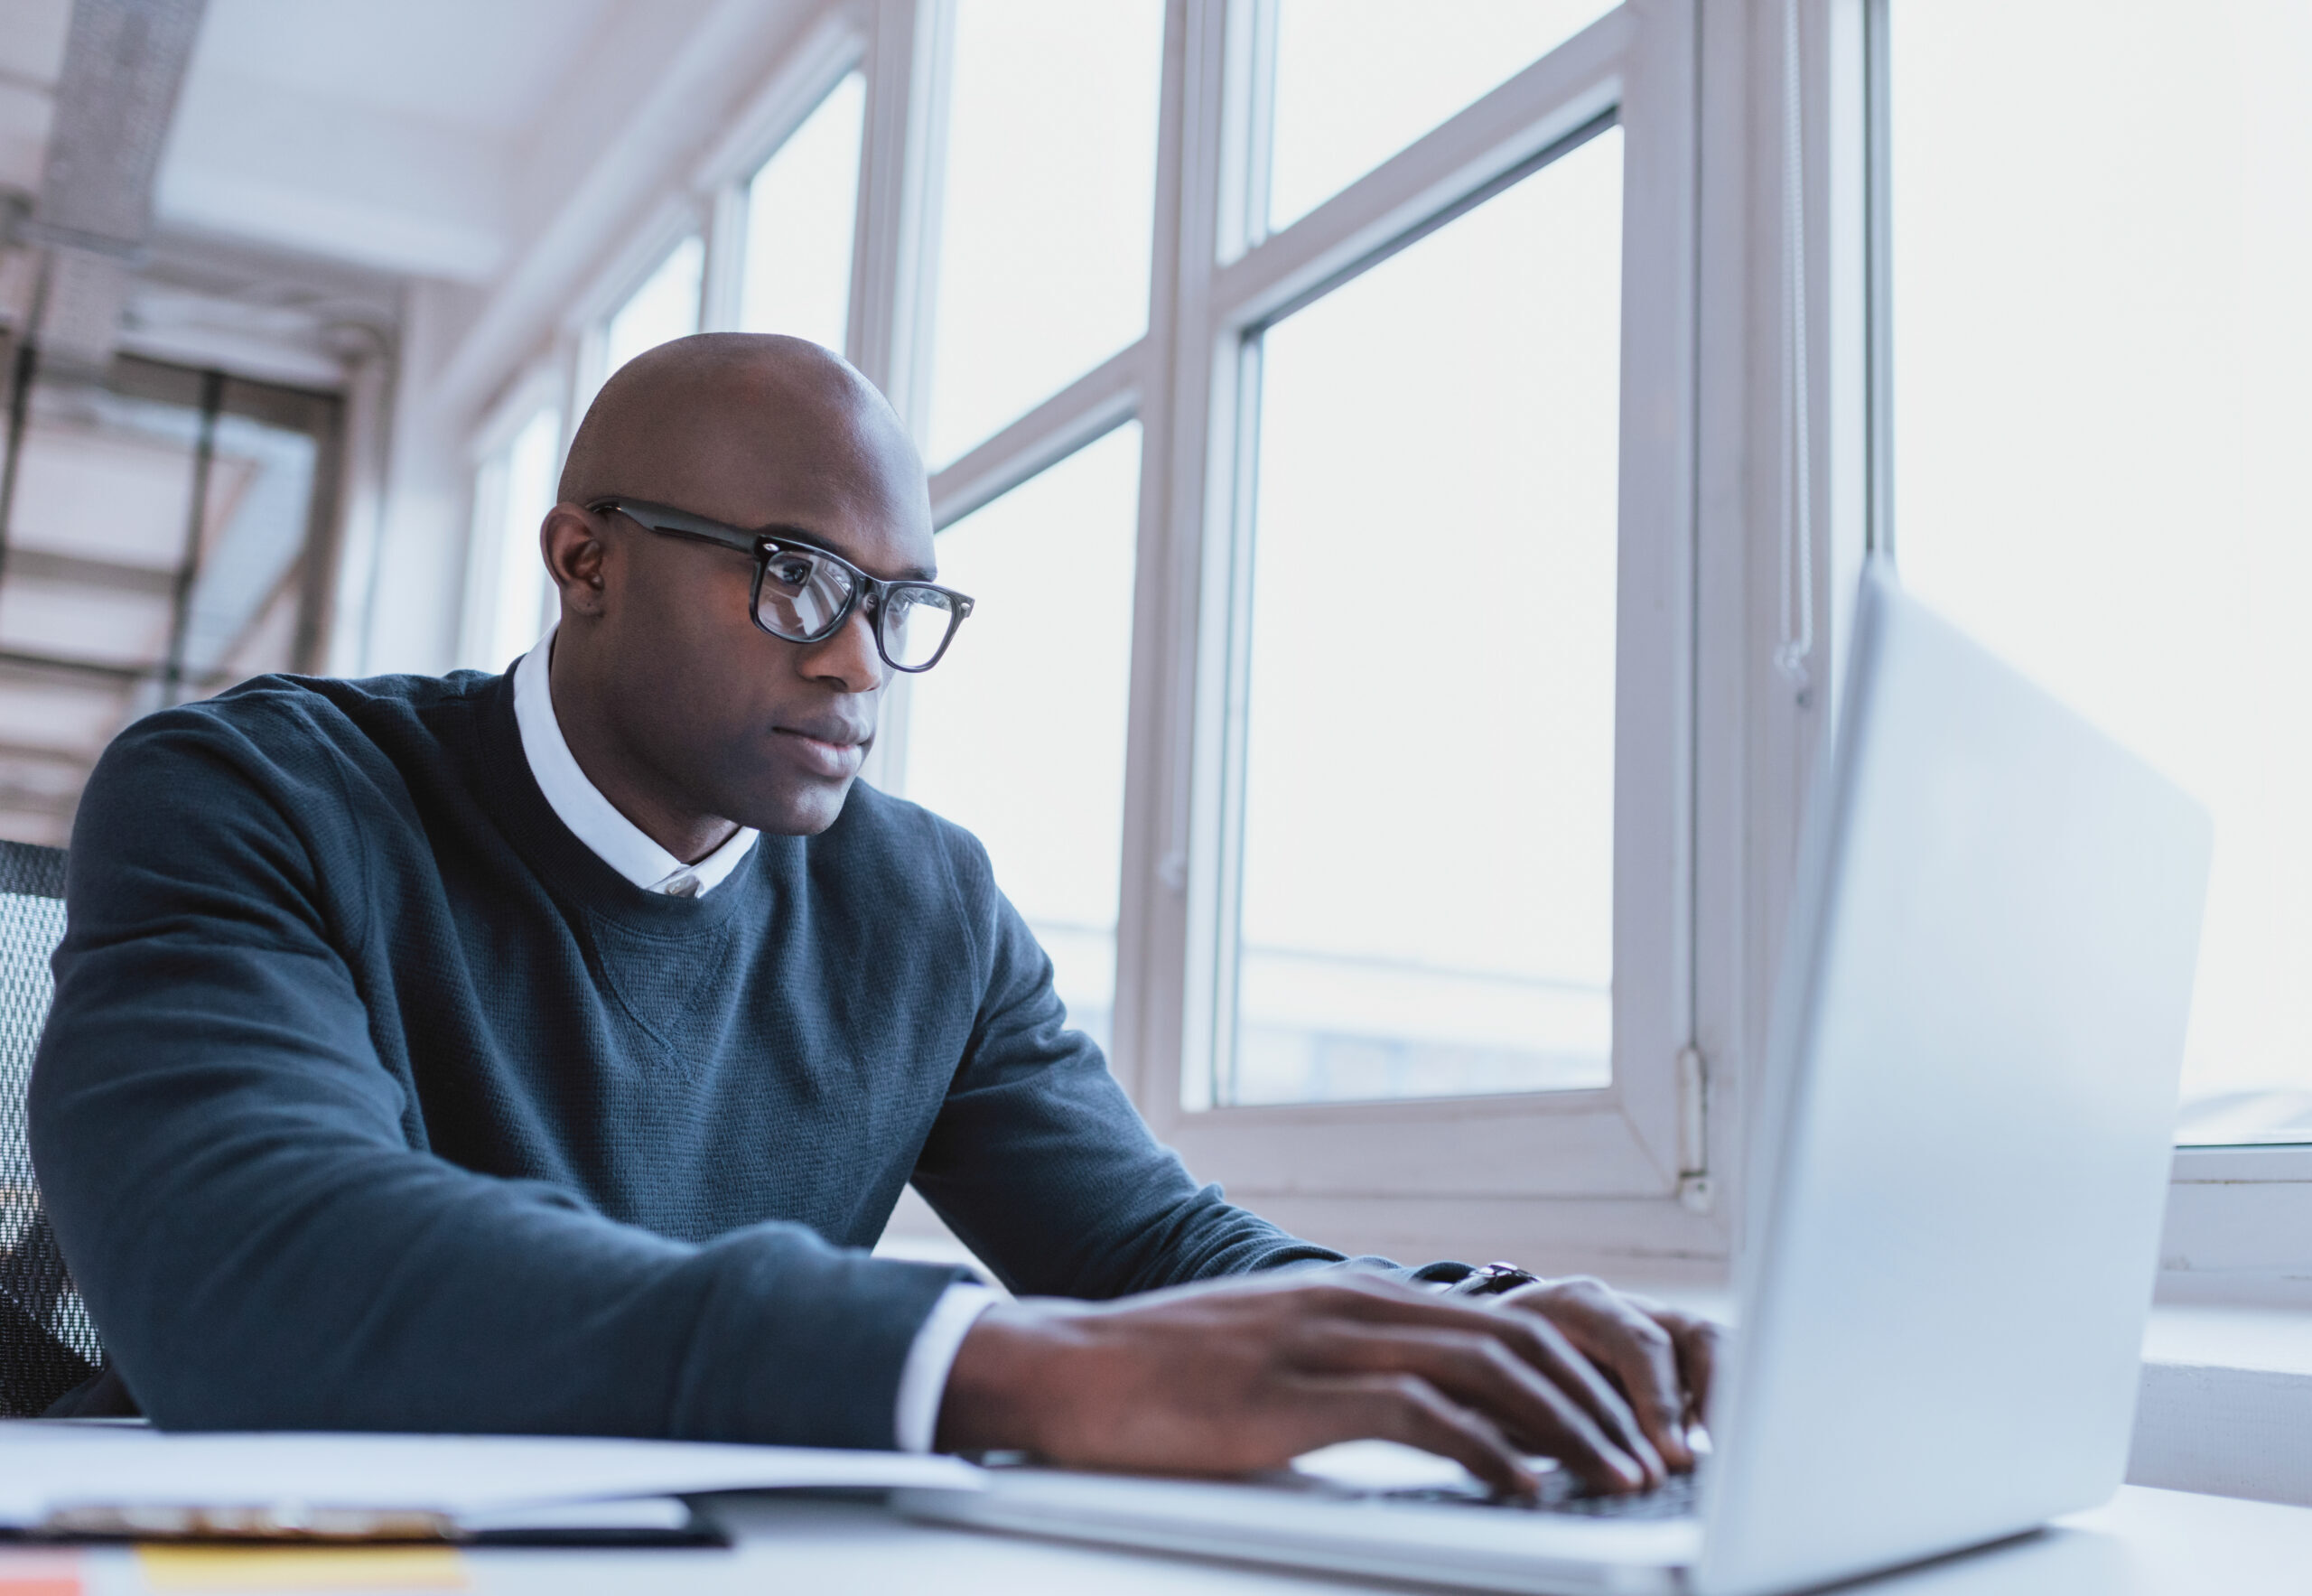 A man wearing glasses is focused on his laptop, engrossed in his work.